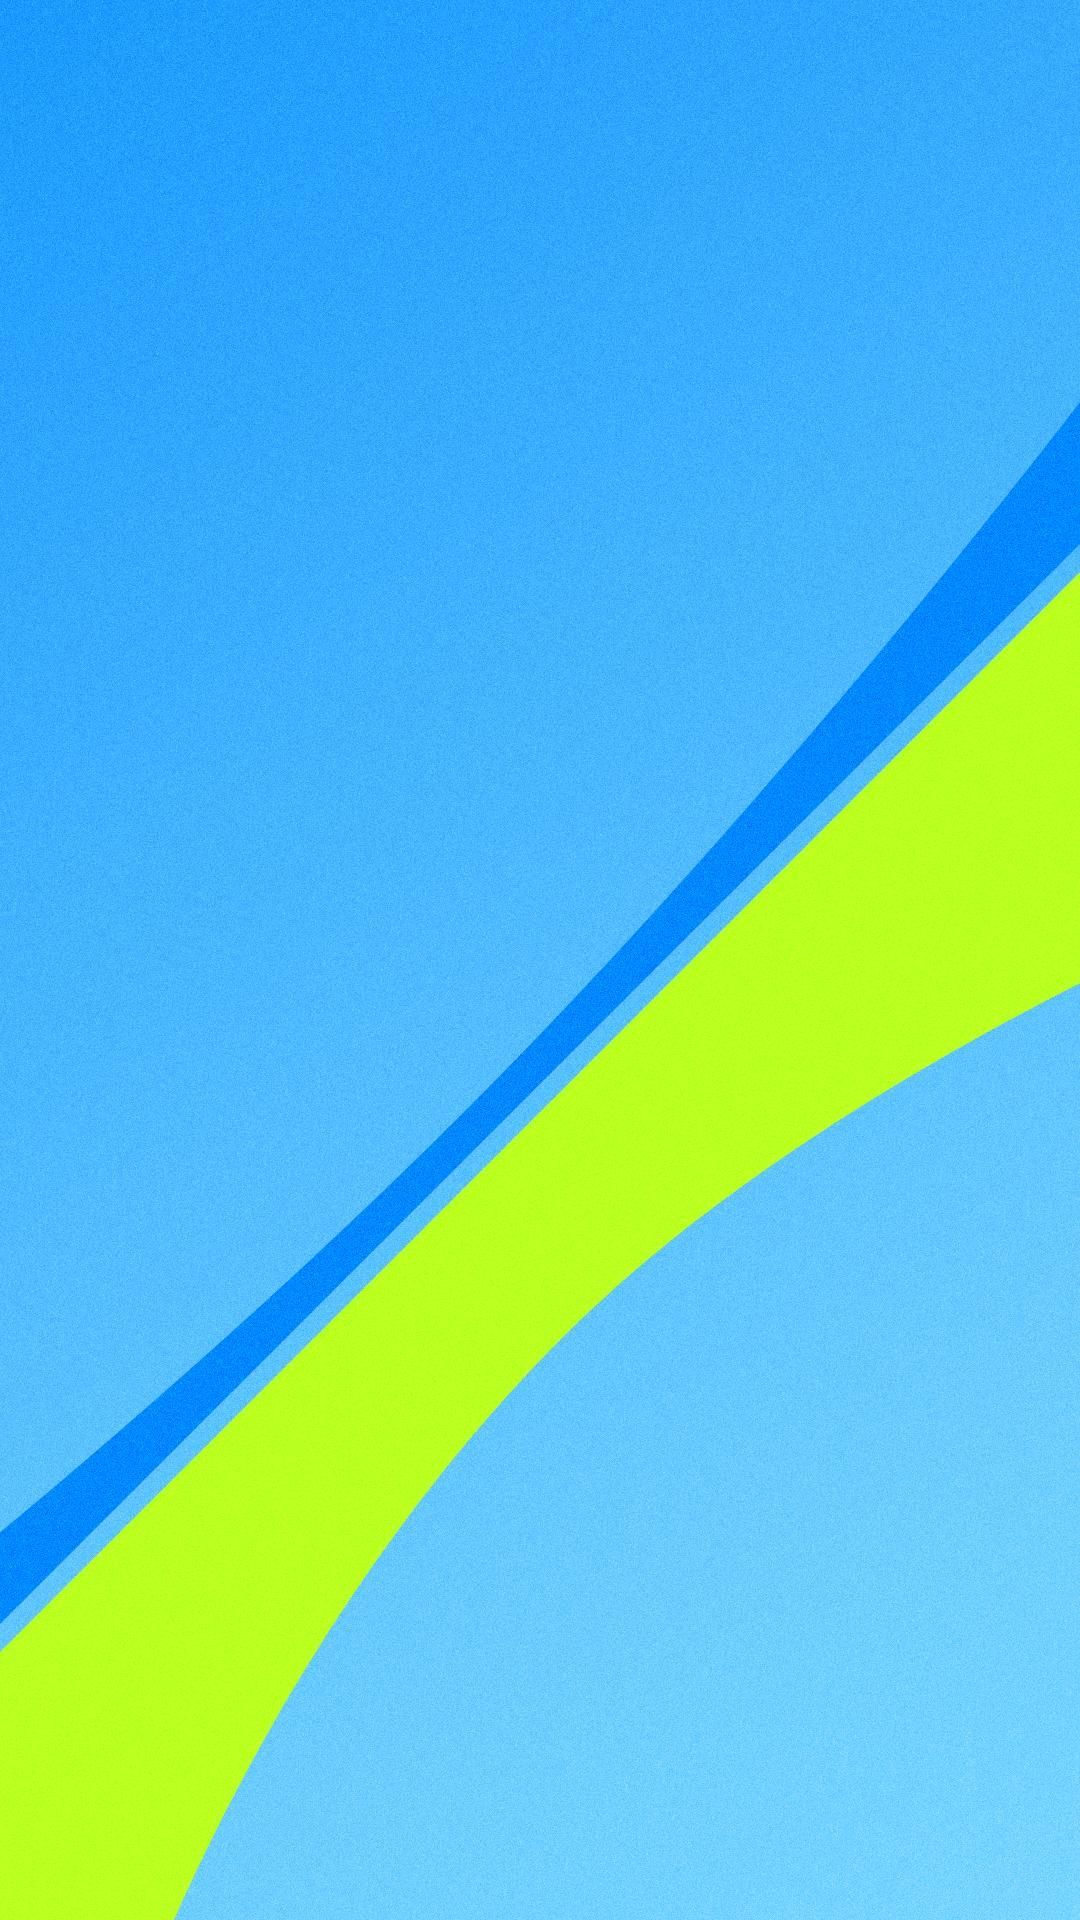 Nexus 5 Simple Wallpaper. Simple wallpaper, Wallpaper, Background patterns